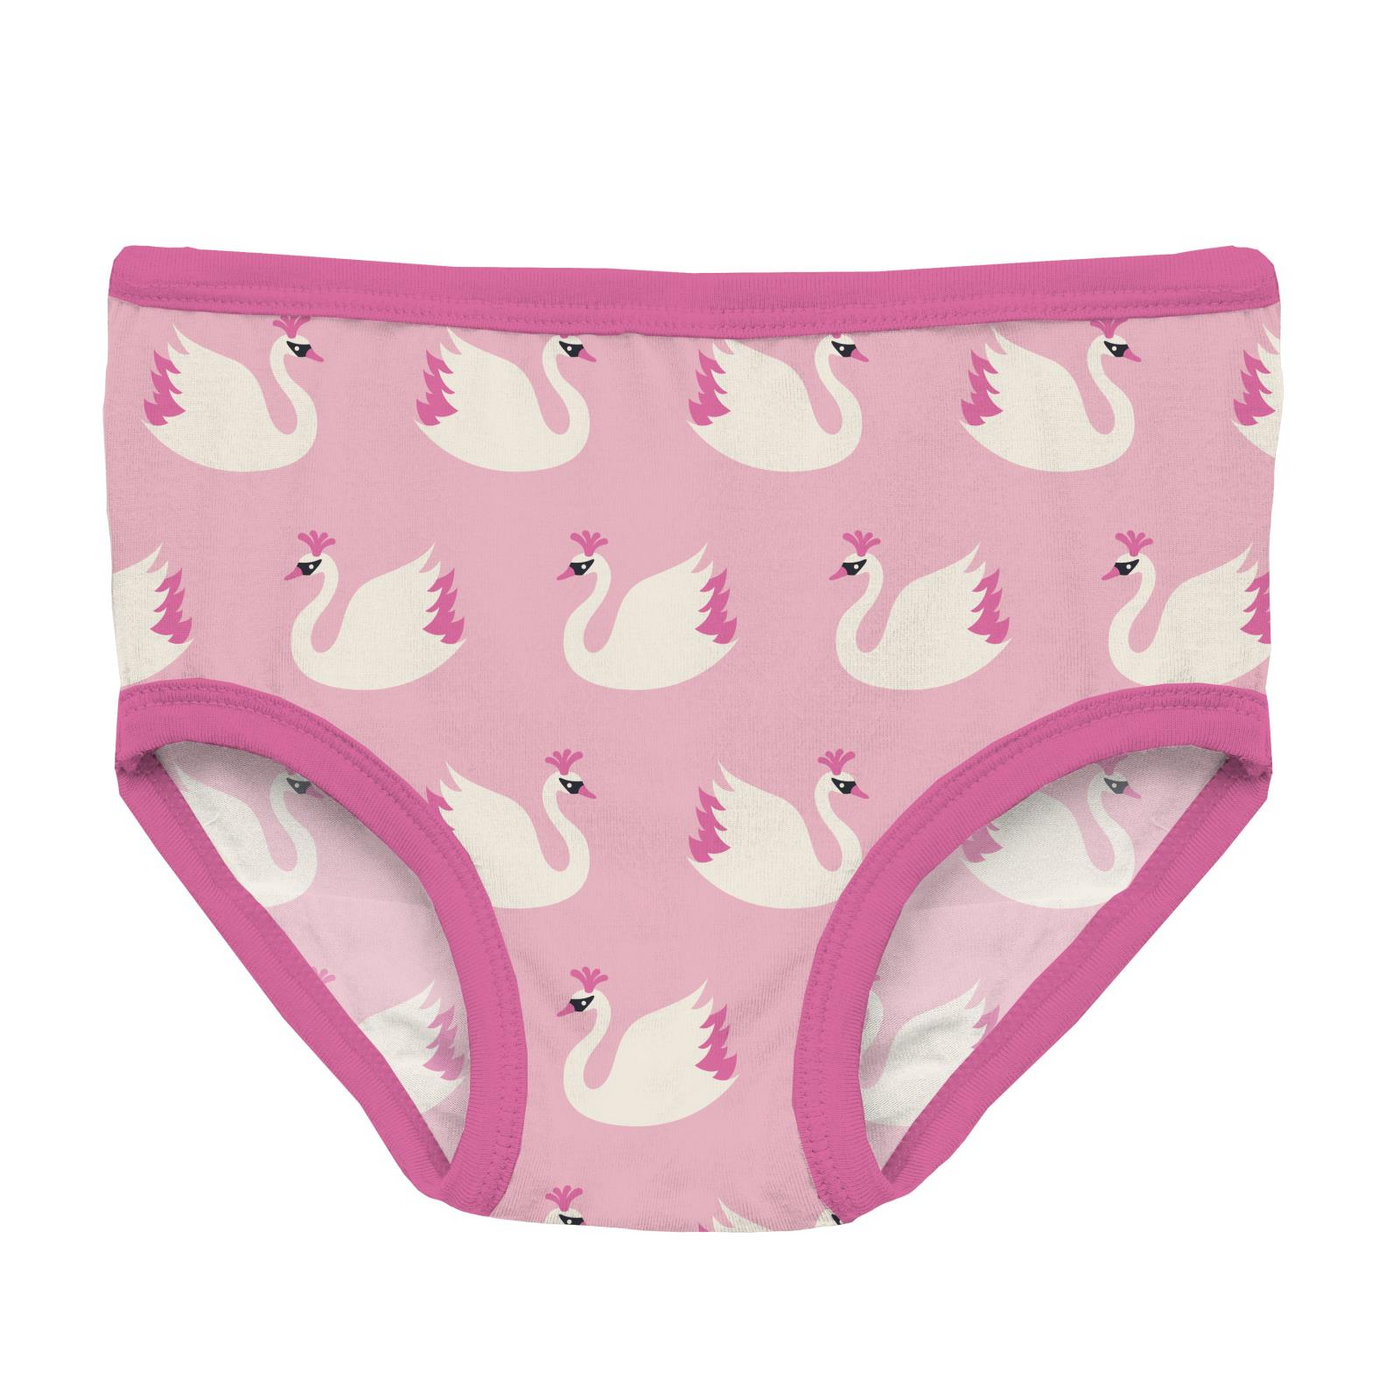 Kickee Pants Girl's Underwear Set of 3: Cake Pop Swan Princess, Natural, Tulip Johnny Appleseed